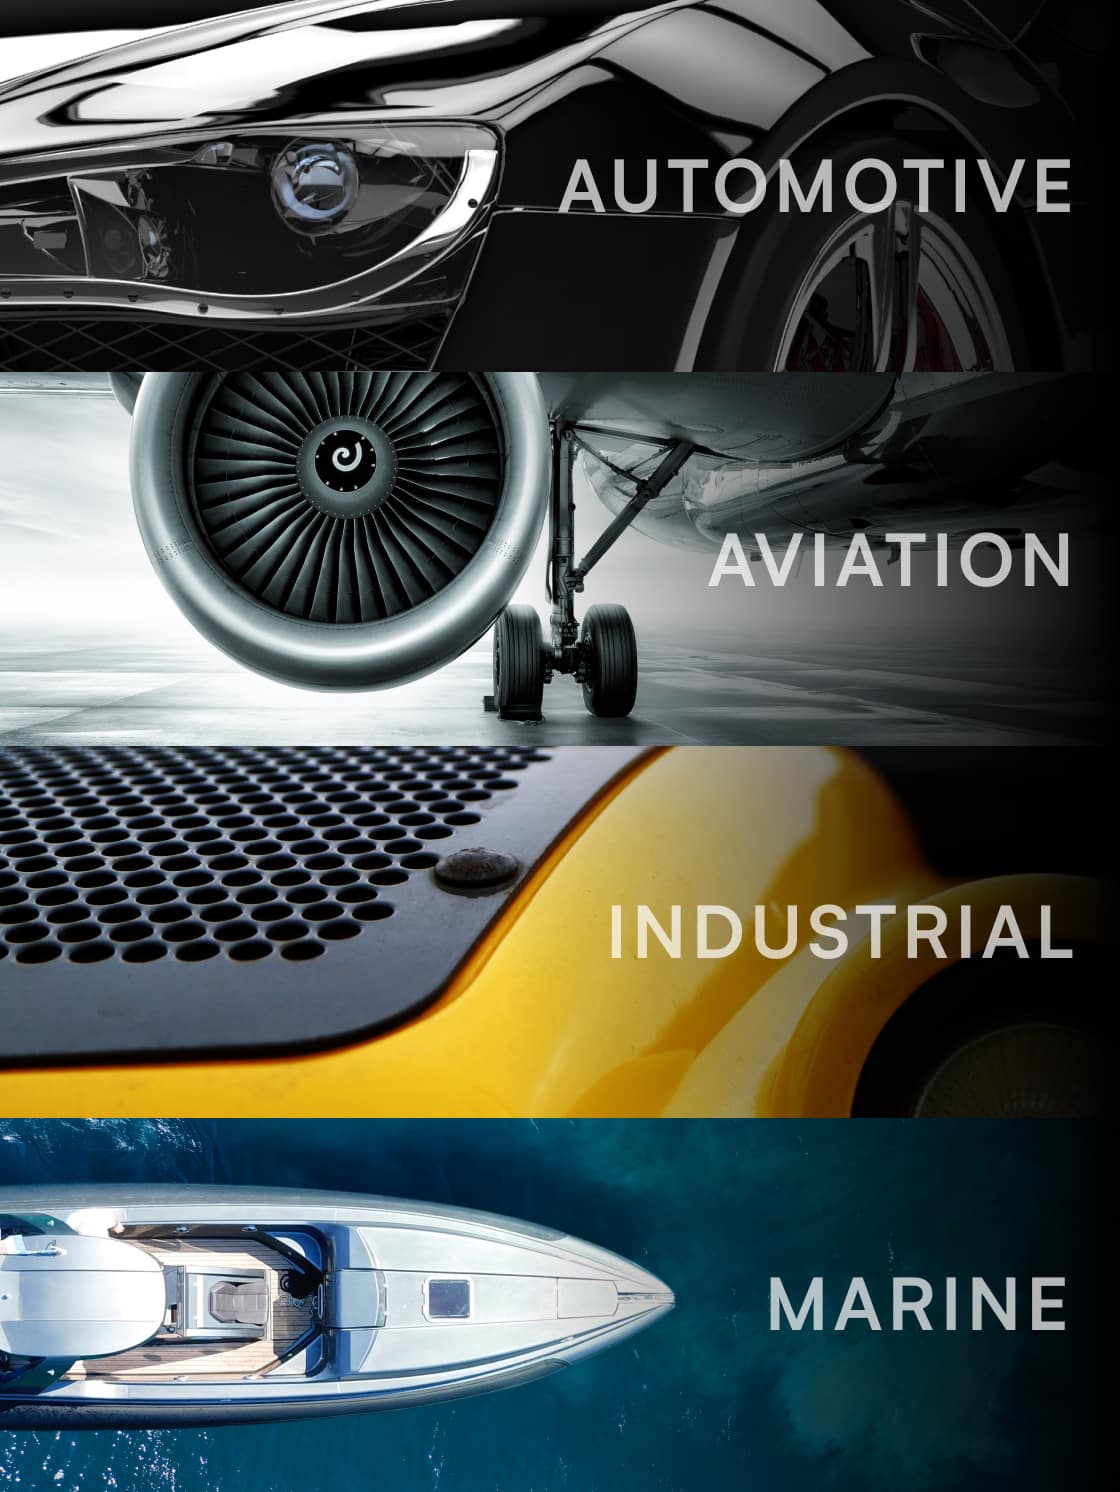 CoverFlexx - Automotive, Aviation, Industrial, Marine